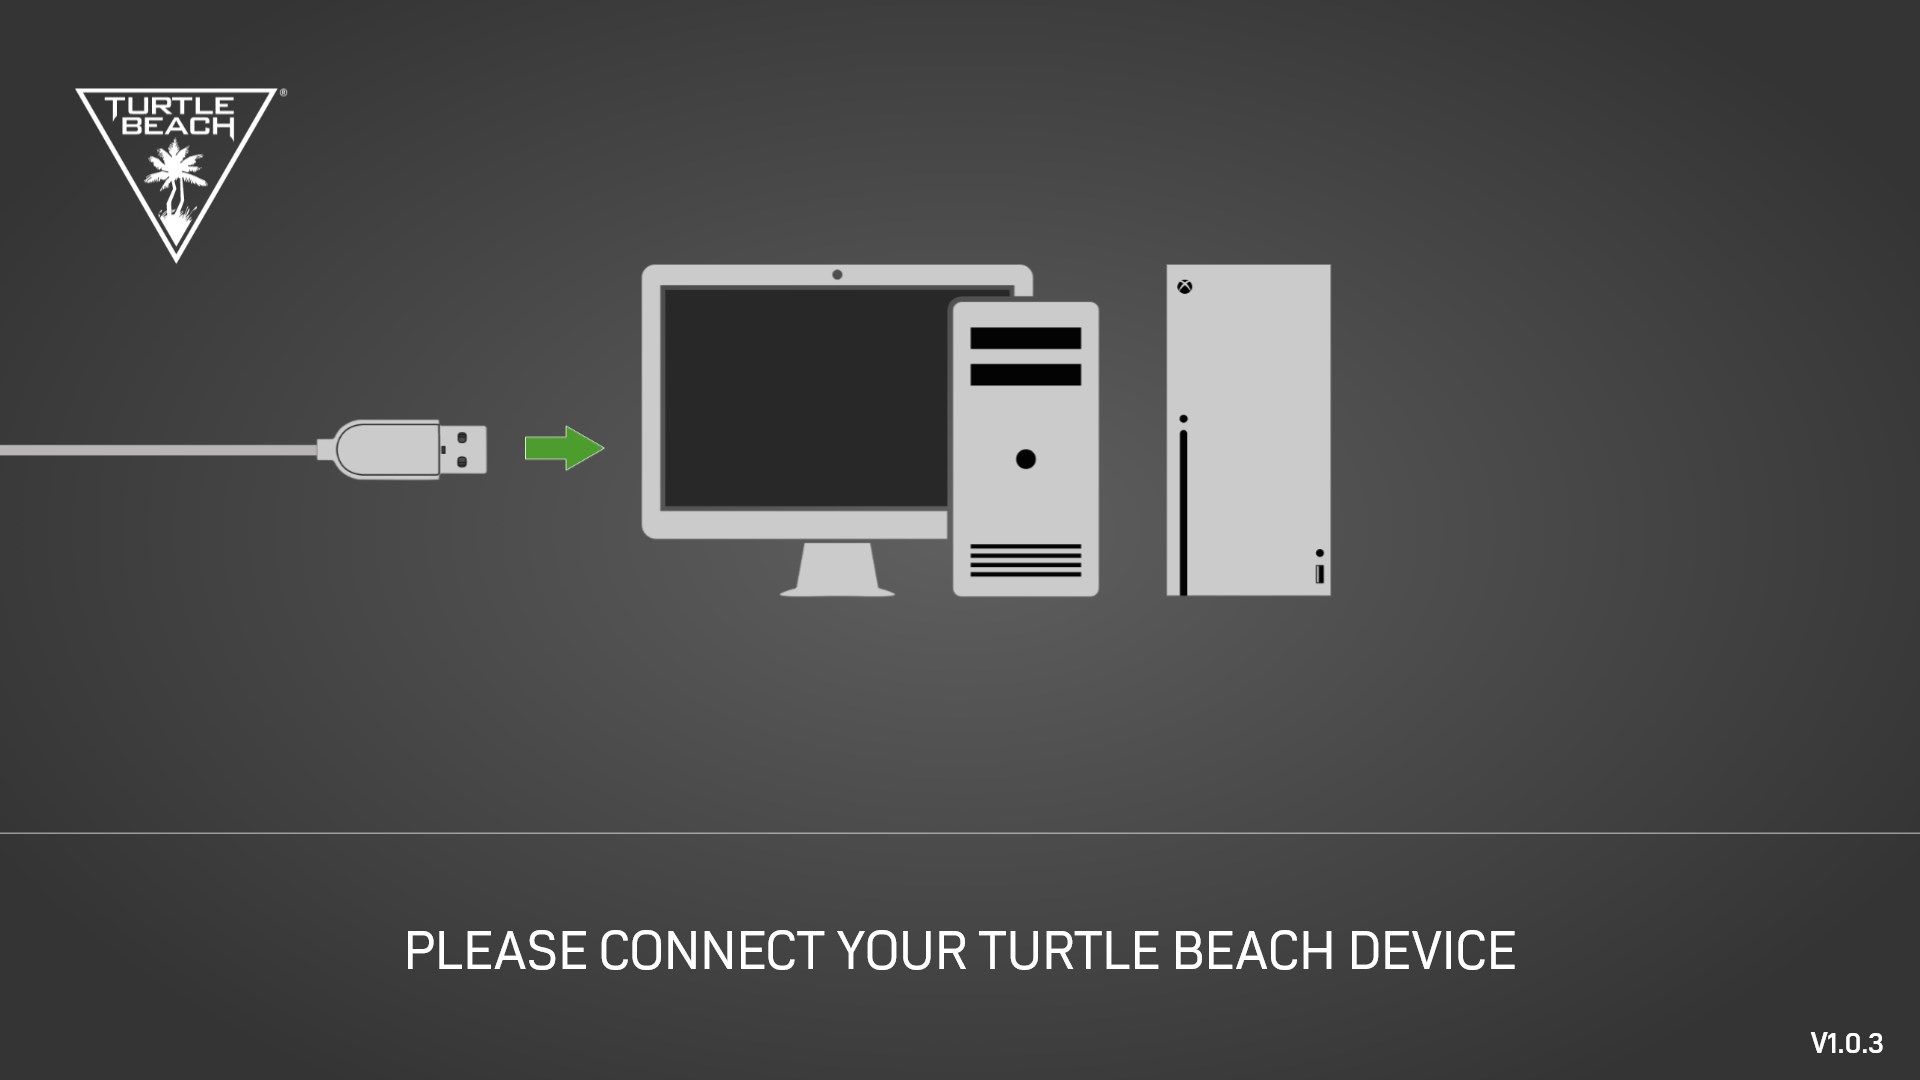 Turtle Beach Control Center